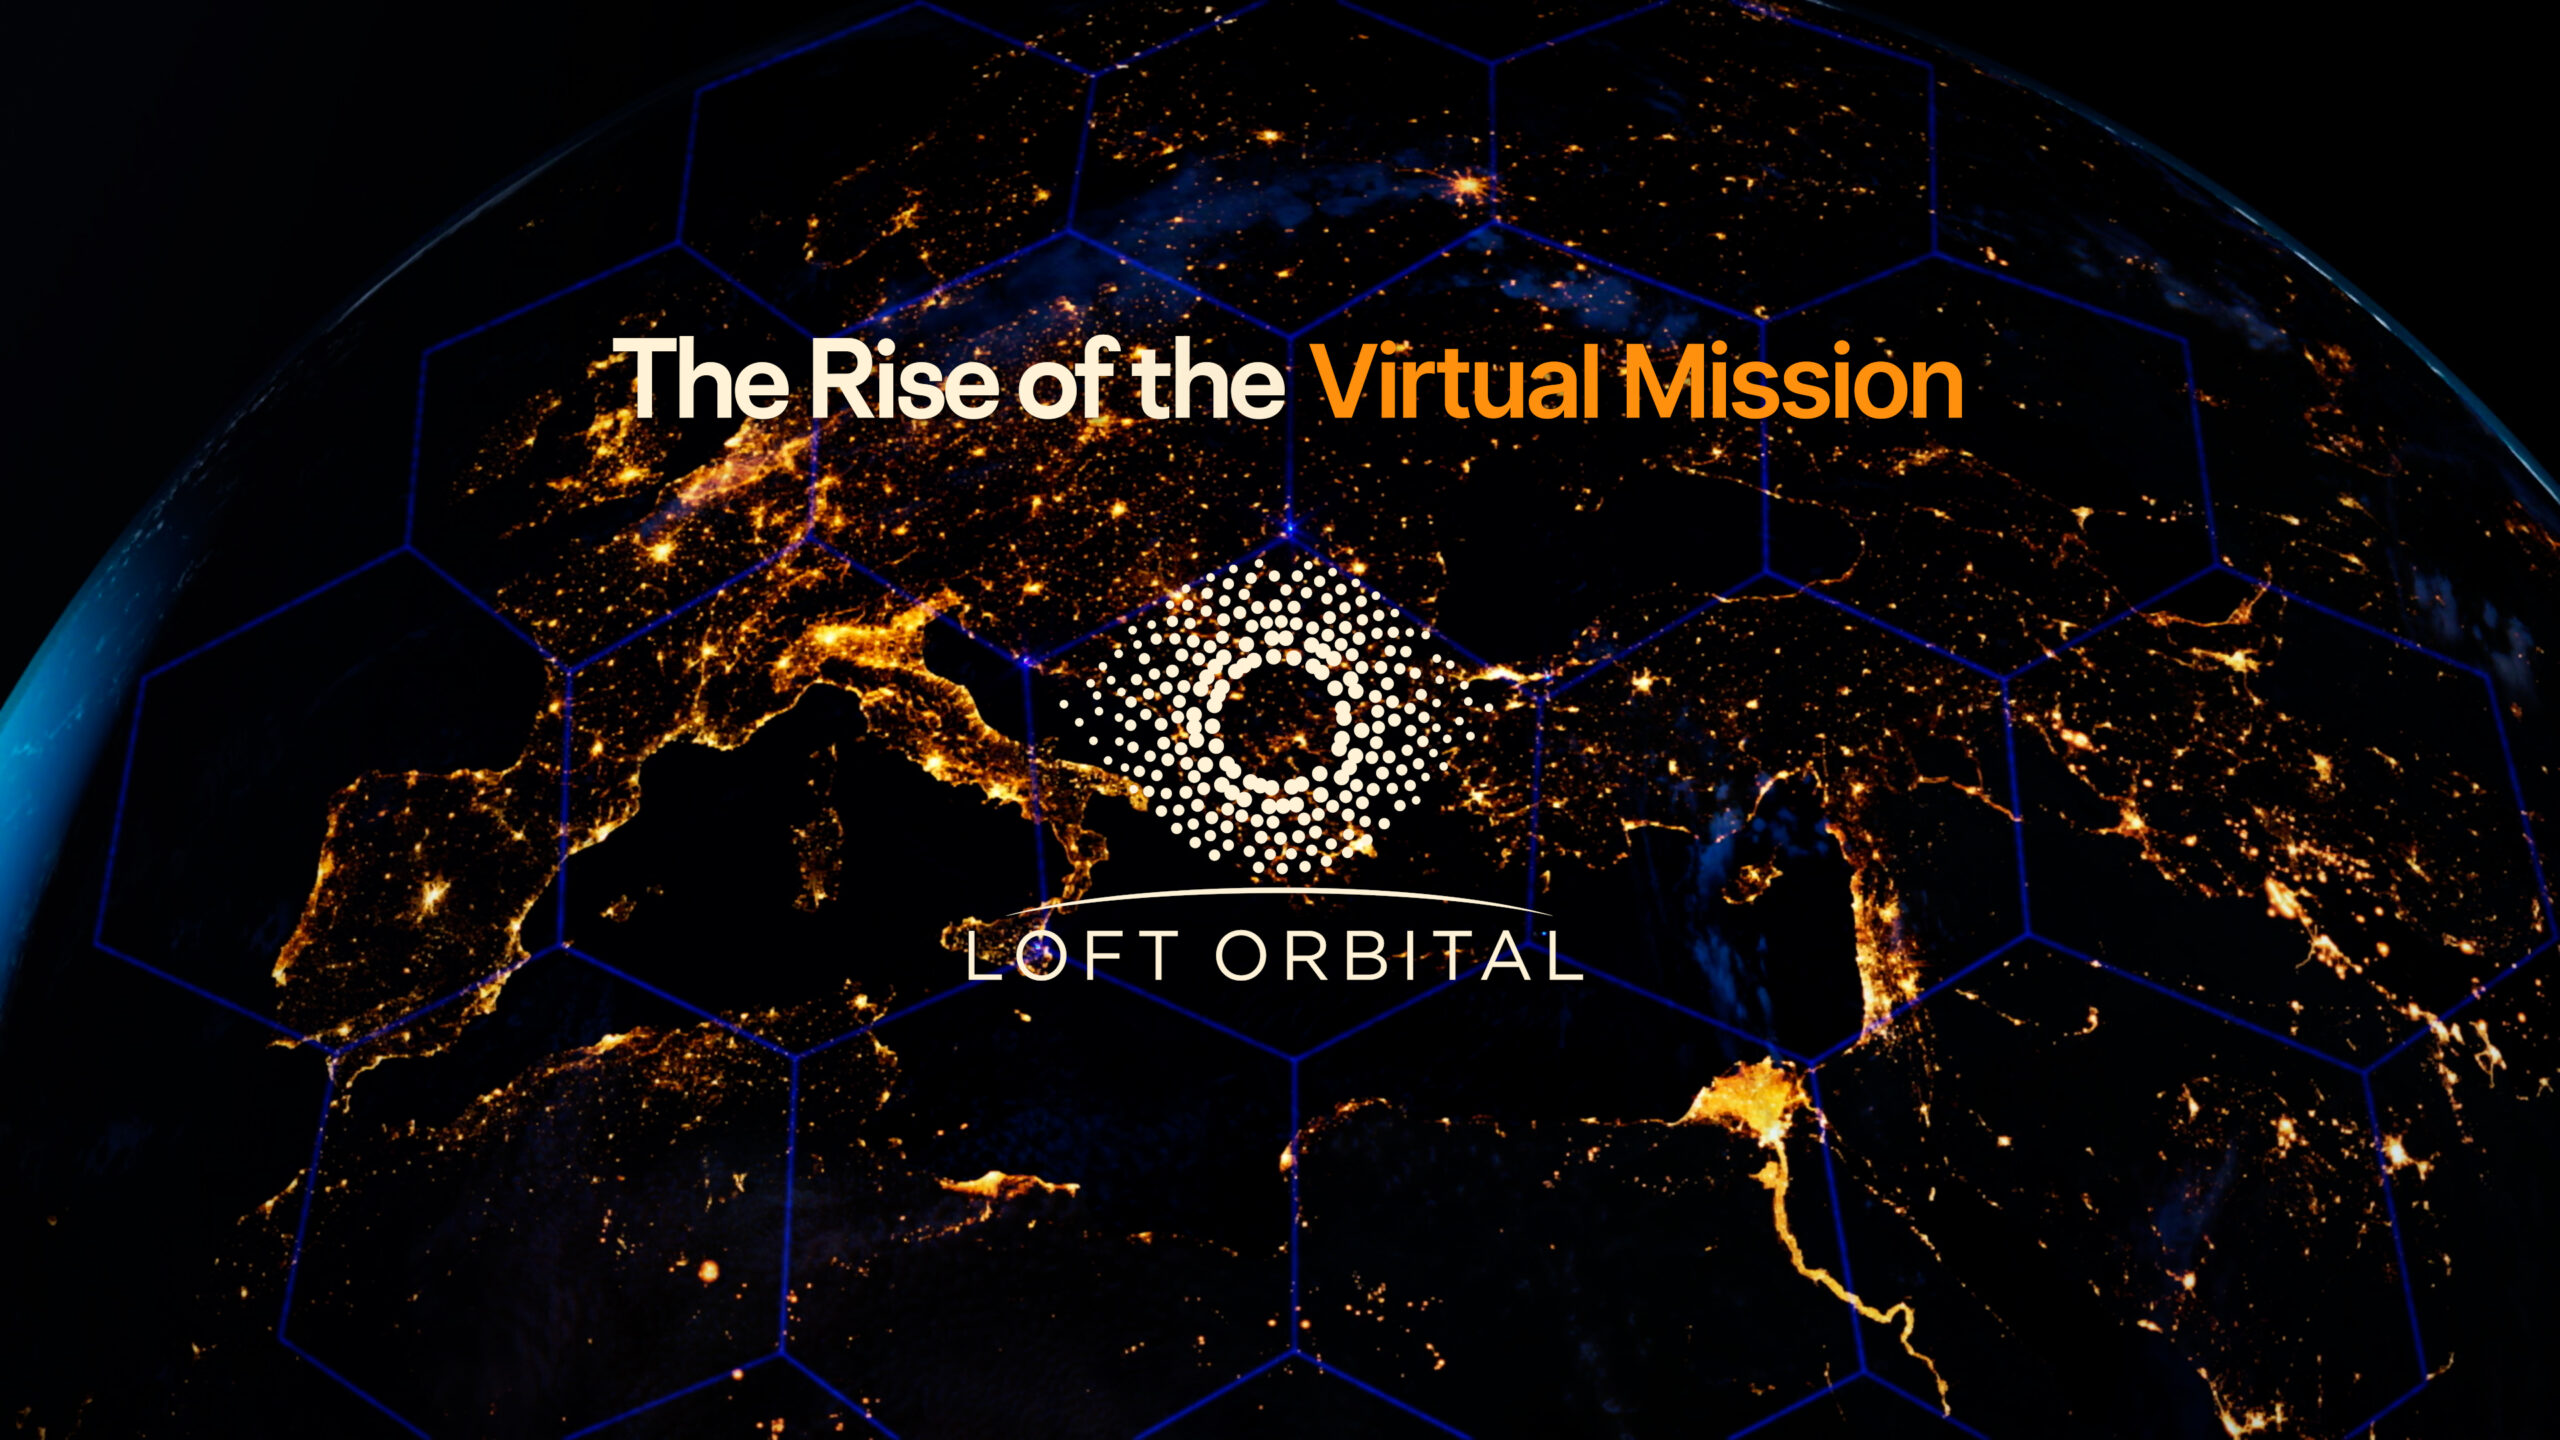 Loft Orbital YAM-6 Rust of the virtual mission Tech Start up video production Full Circle Streaming & Digital